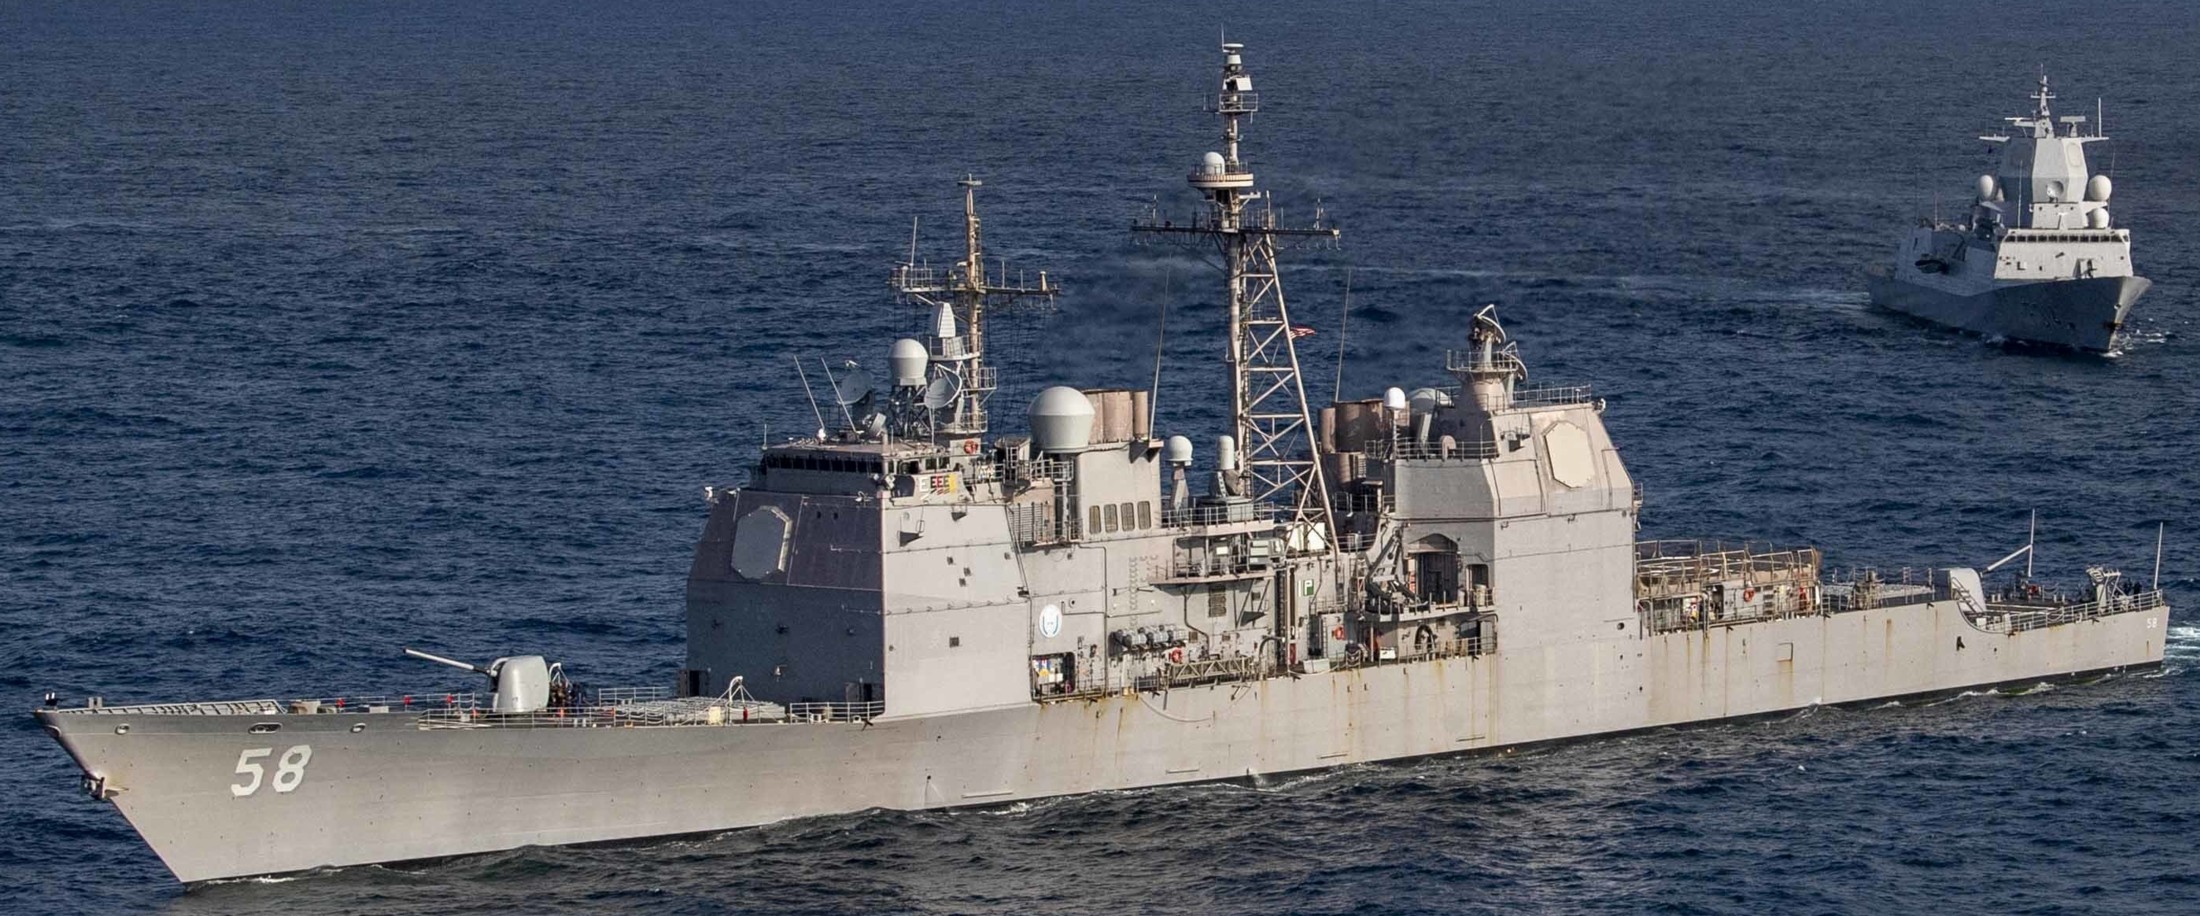 cg-58 uss philippine sea ticonderoga class guided missile cruiser aegis us navy 55